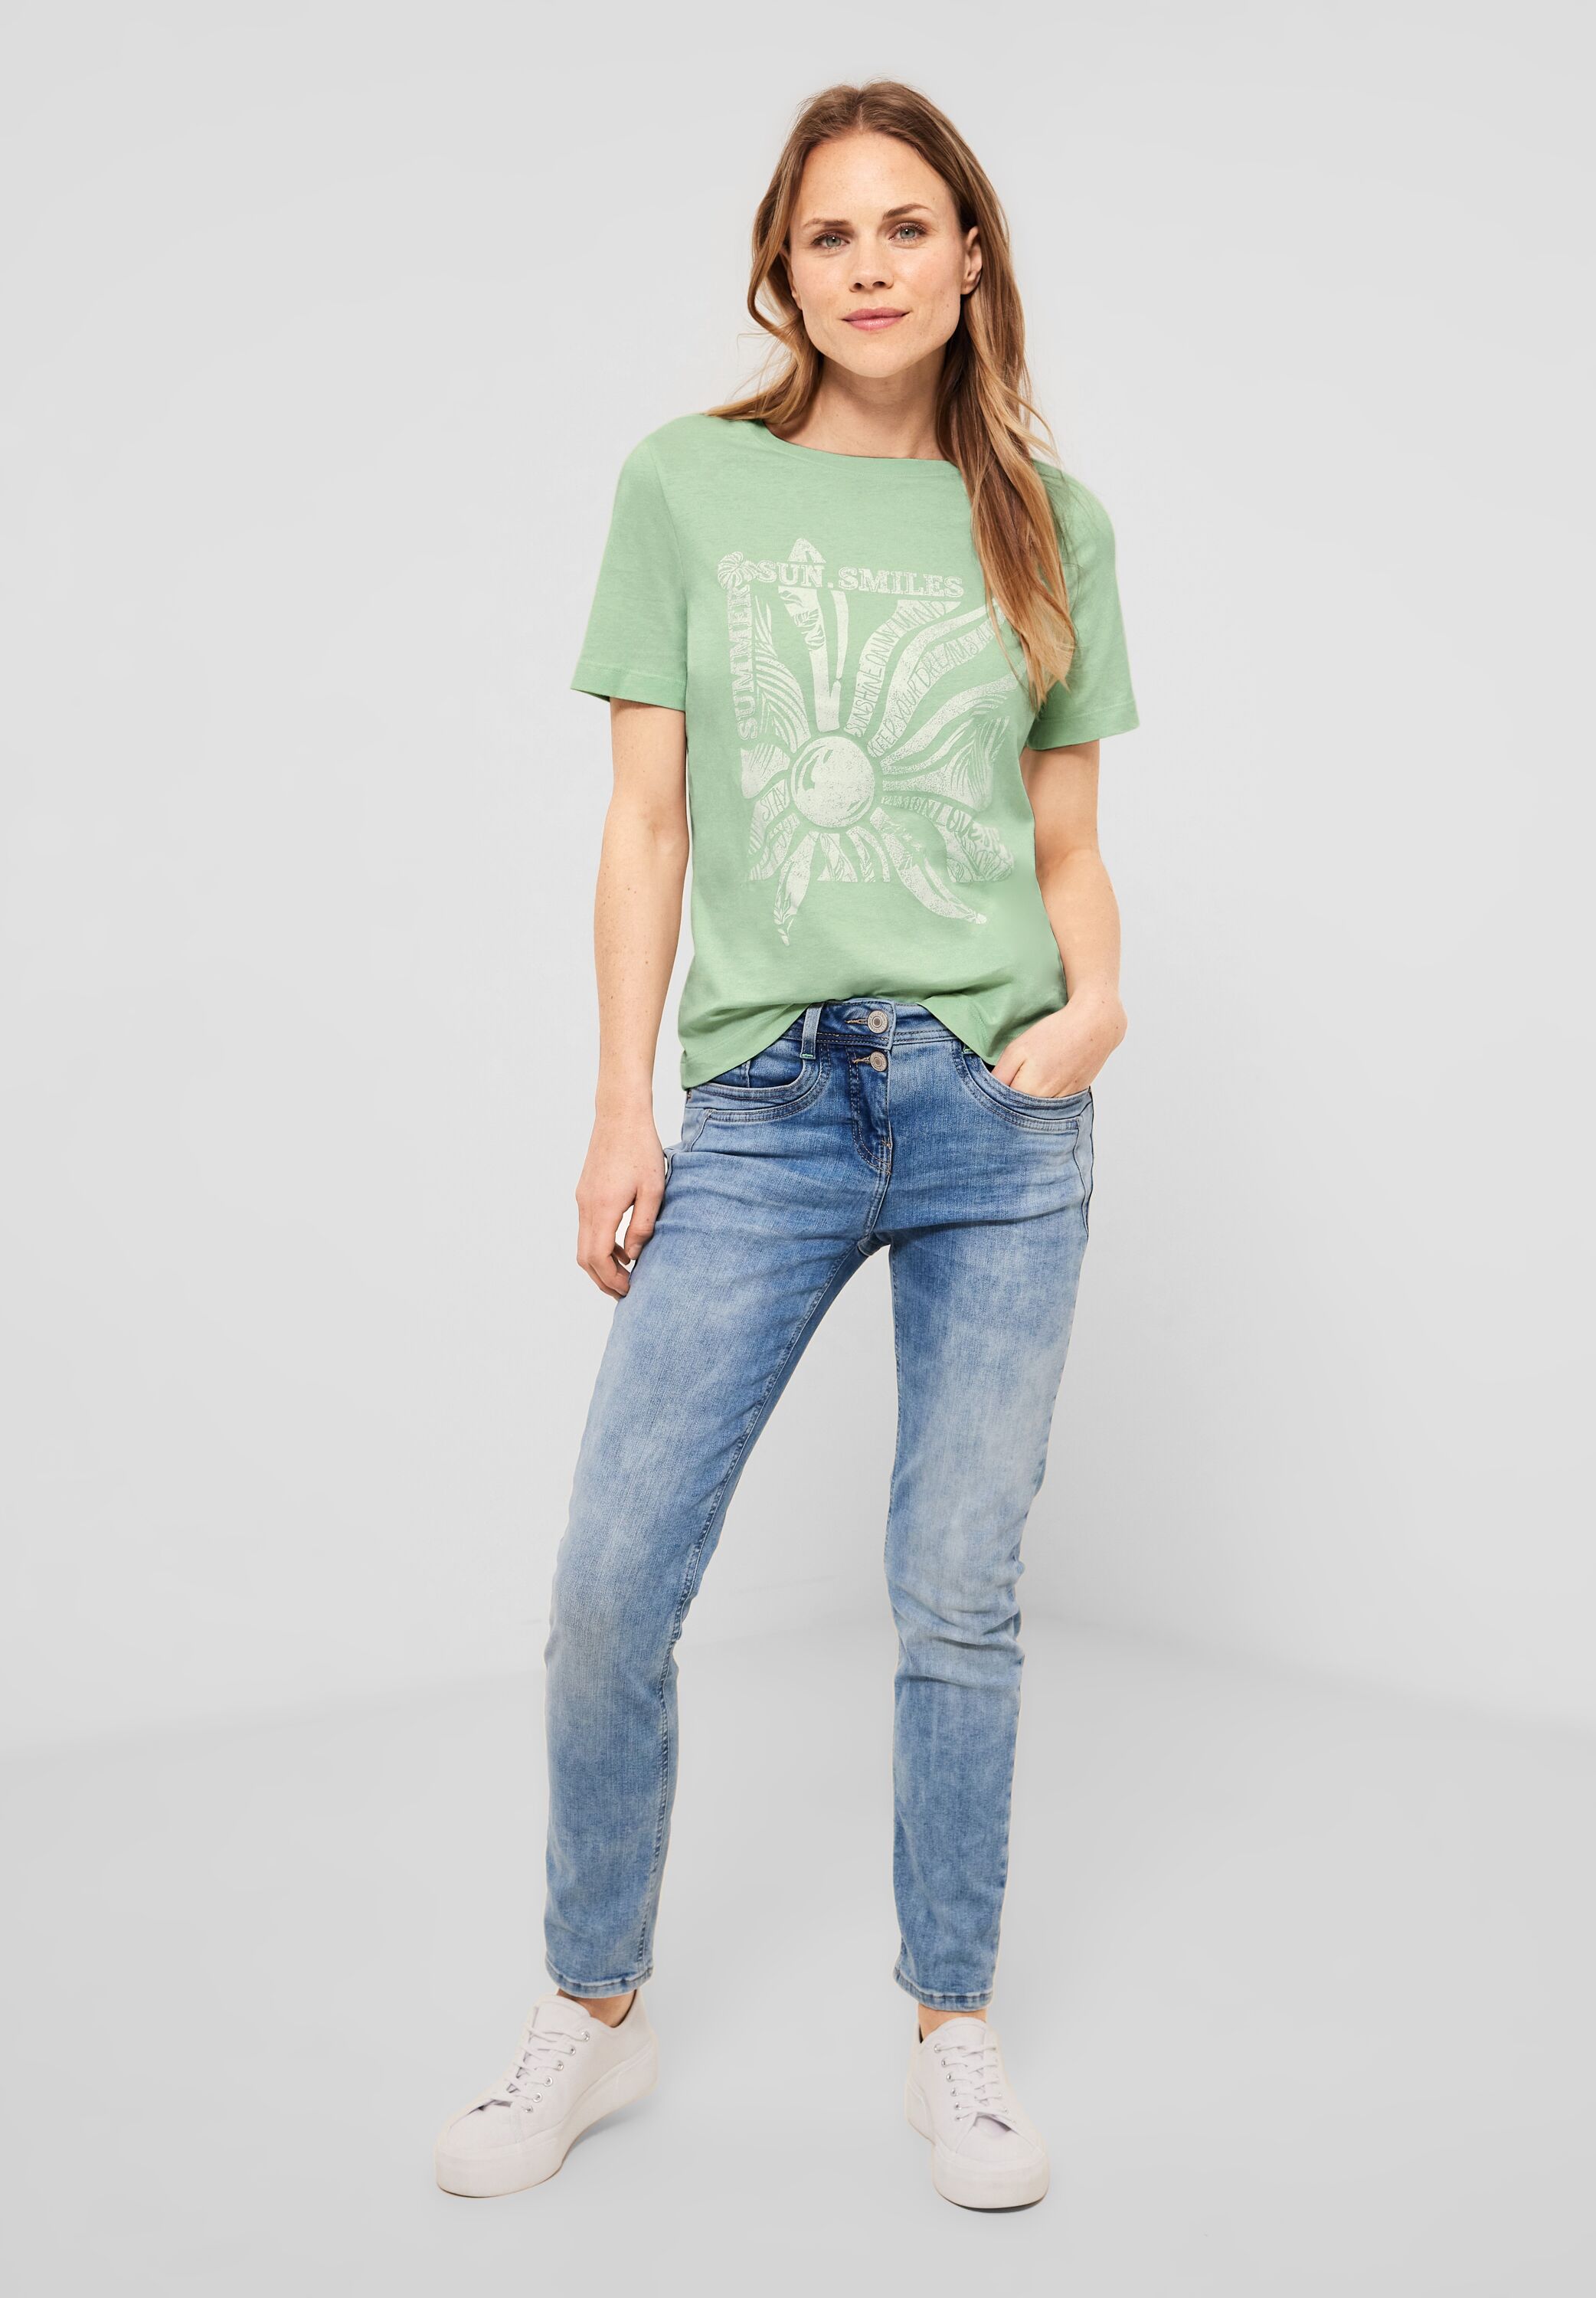 CECIL T-Shirt in Fresh Green SALE Salvia B320051-24851 - Mode im CONCEPT reduziert